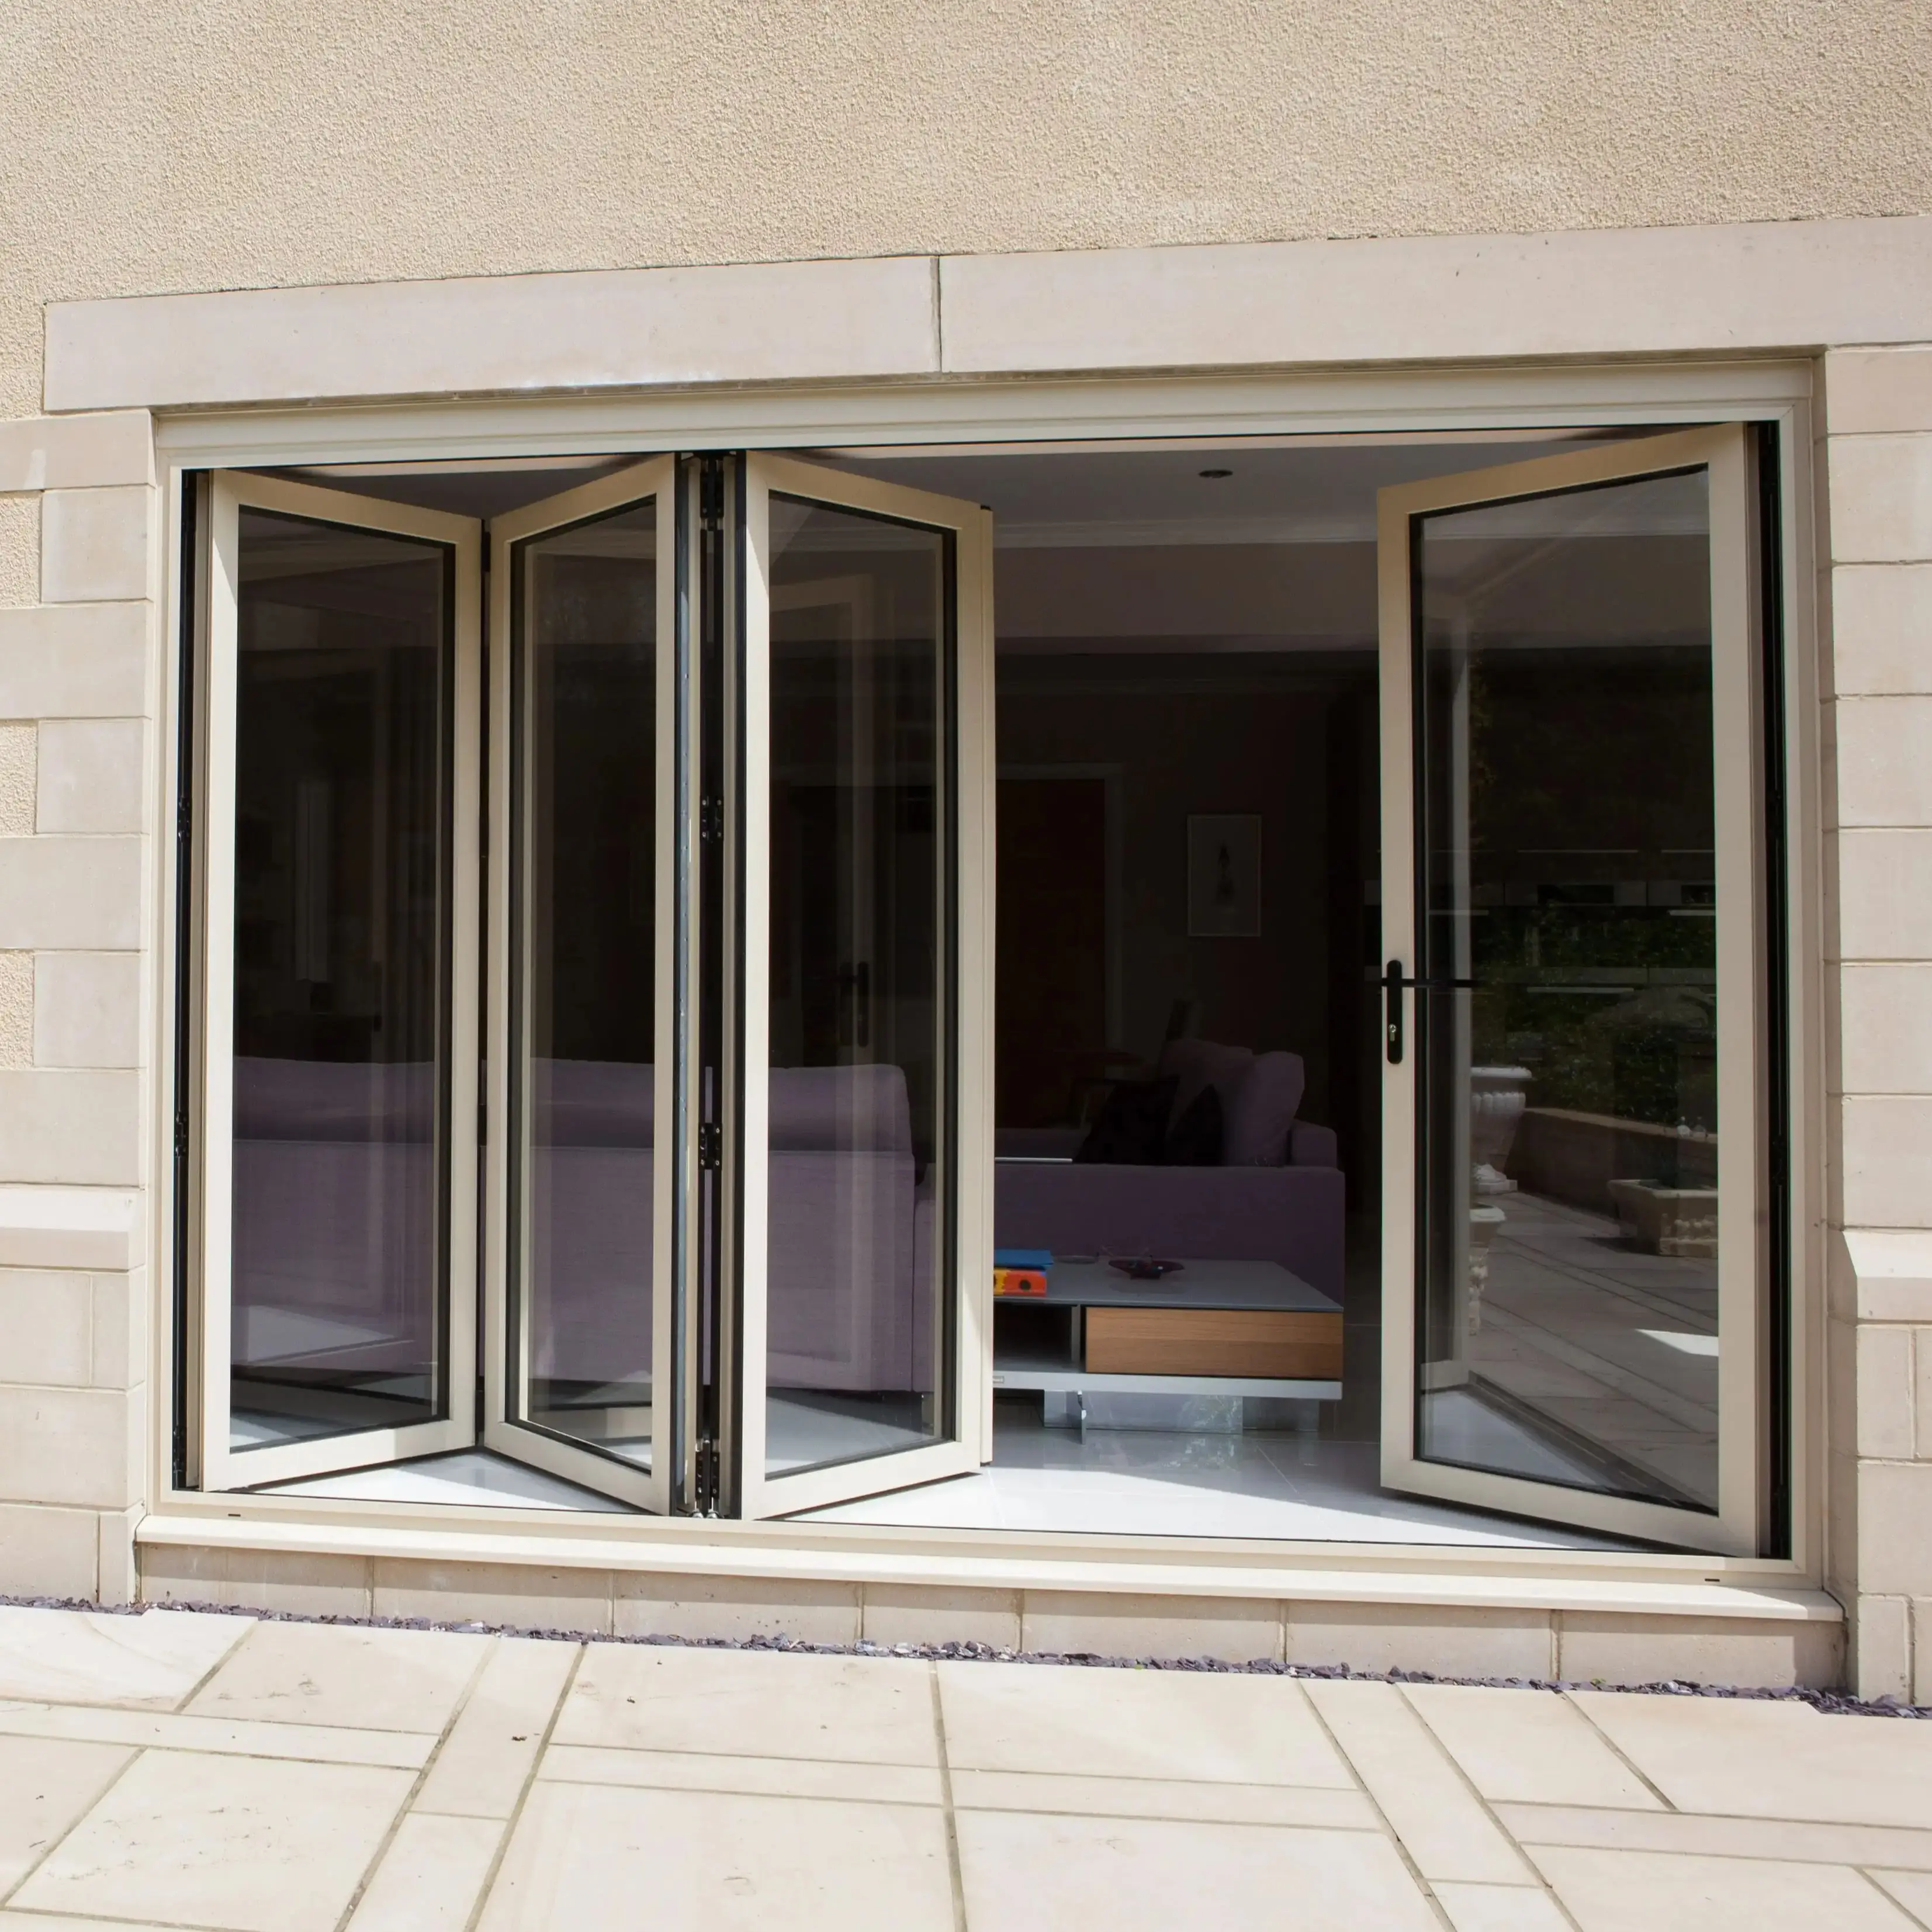 Sixinalu Household Doors Aluminum Glass Folding Doors For Sunroom Office Room Doors Double Glazed Tempered Glass Screen Doors